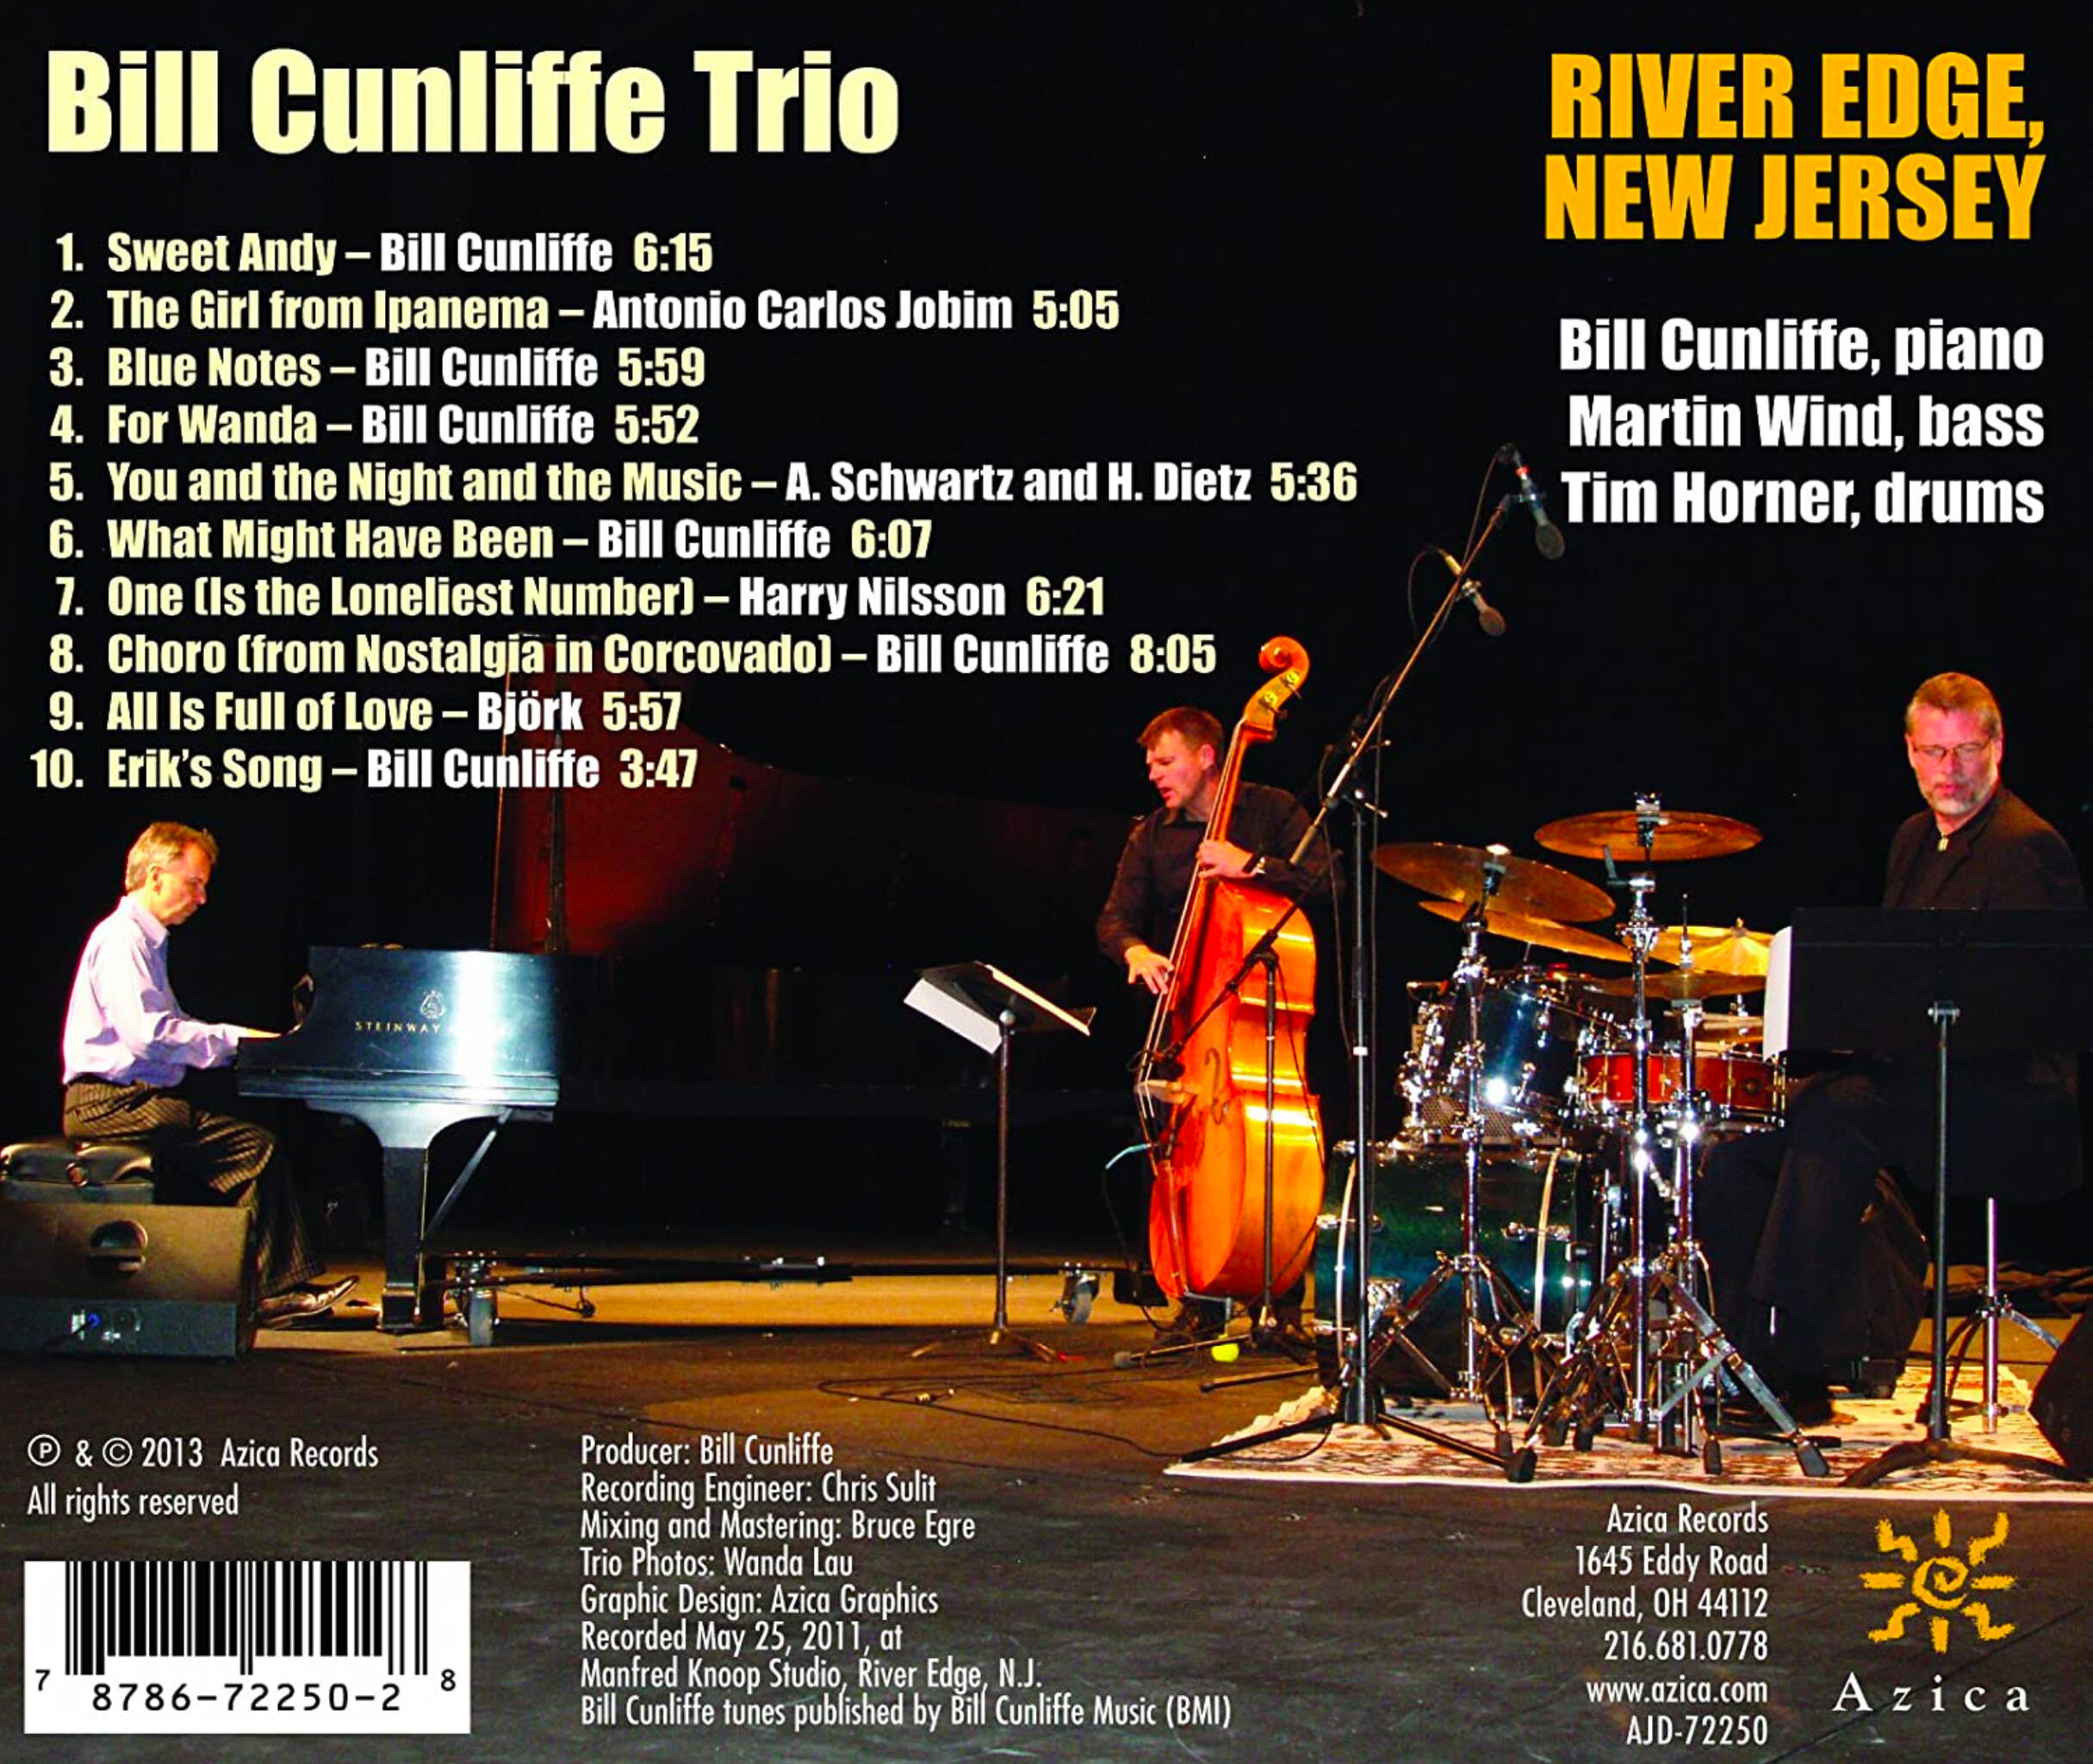 river-edge-new-jersey-bill-cunliffe-trio-2013-2.jpg